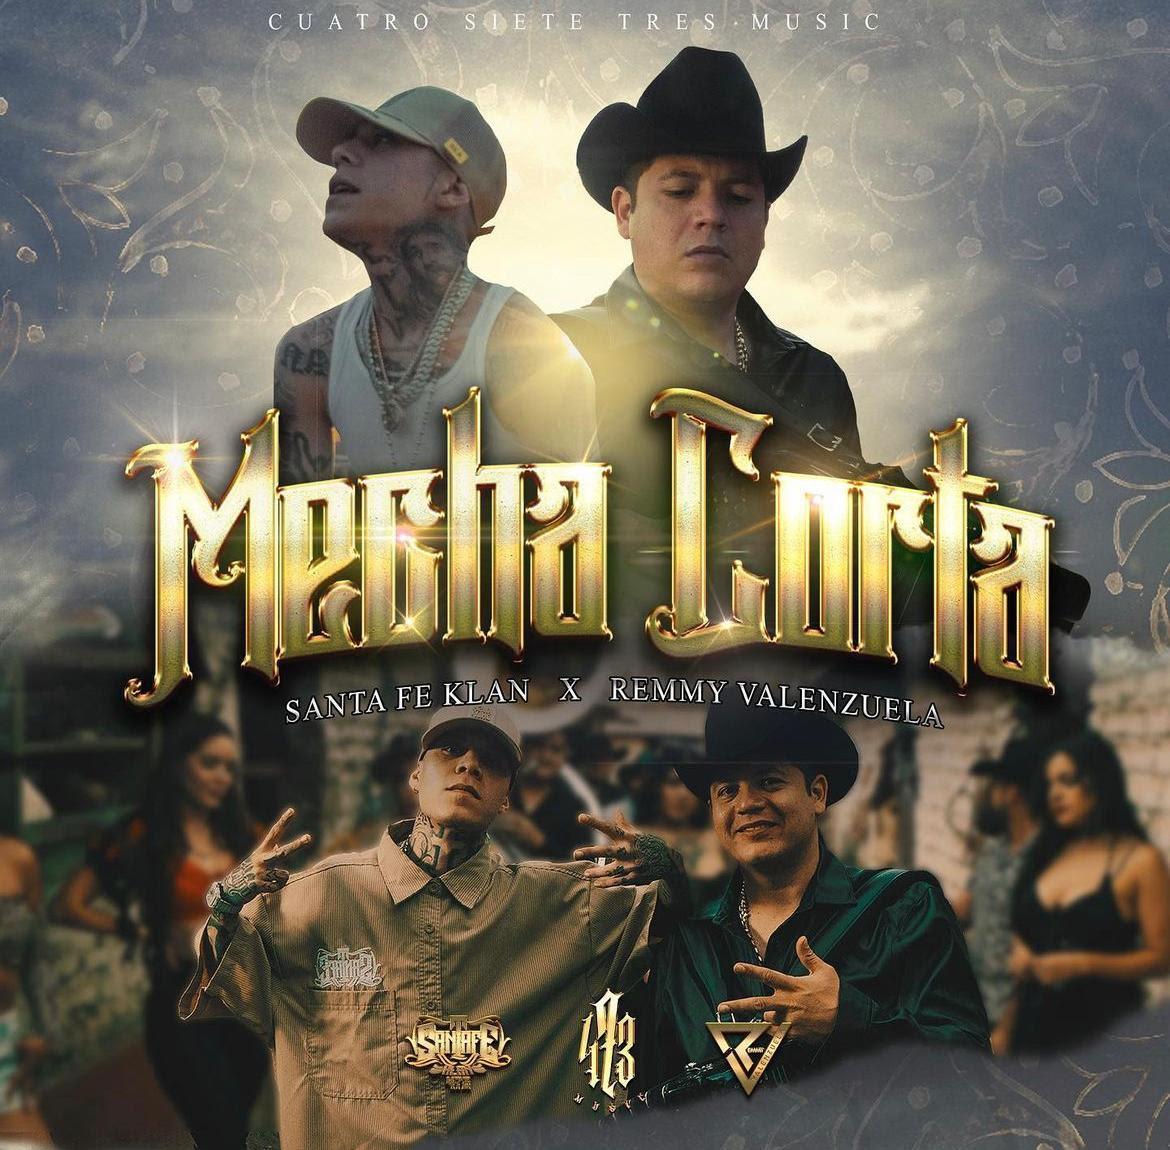 $!Remmy Valenzuela y Santa Fe Klan lanzan ‘Mecha Corta’